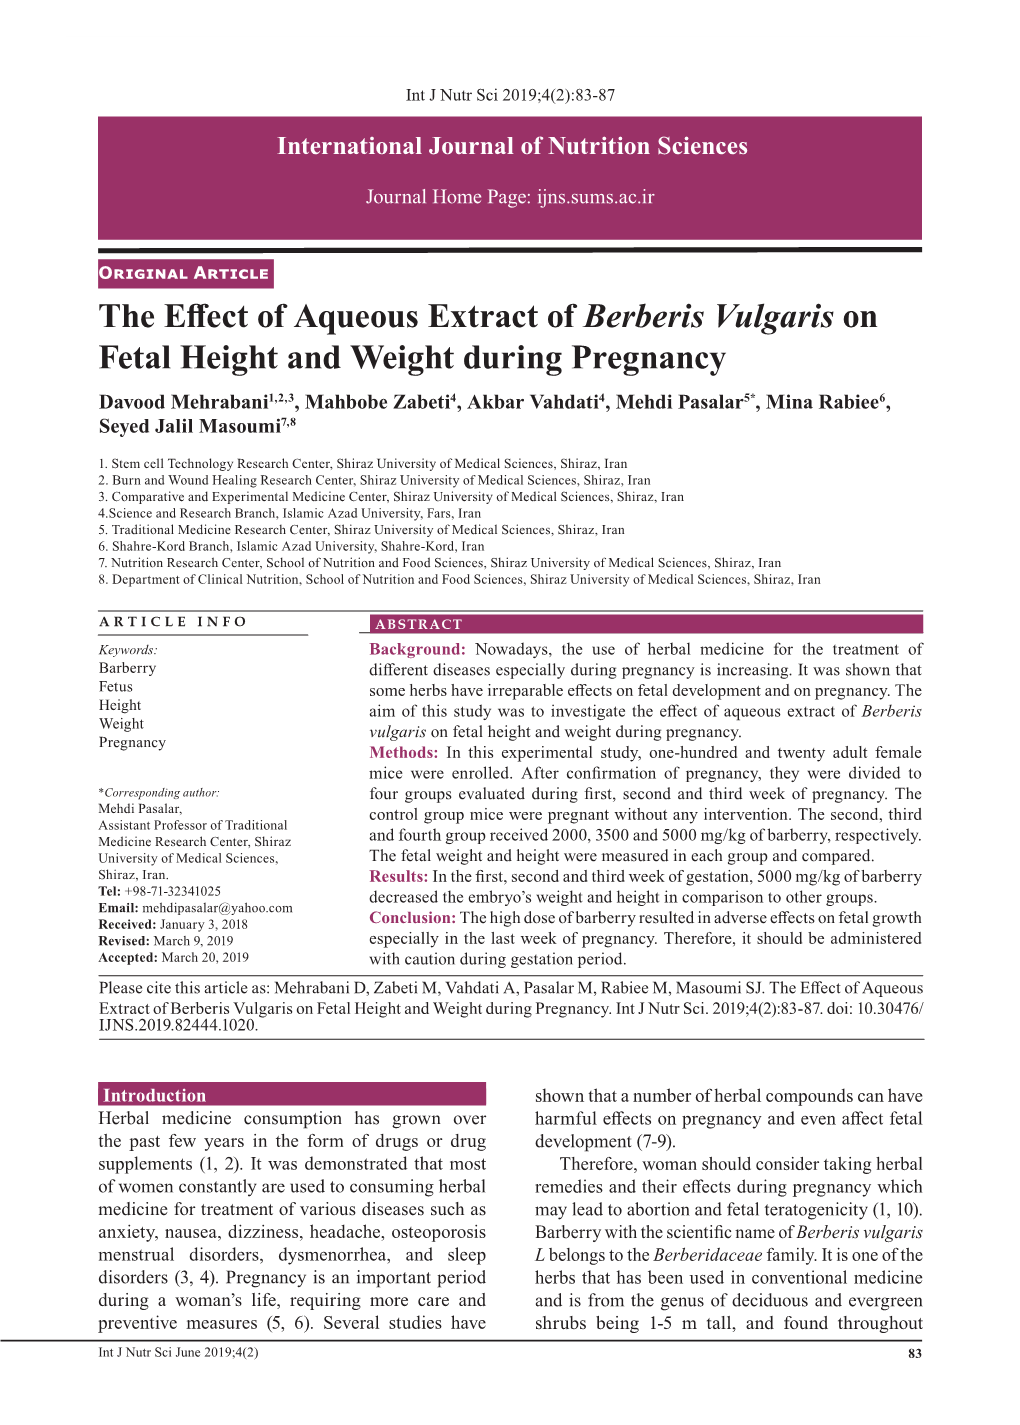 The Effect of Aqueous Extract of Berberis Vulgaris on Fetal Height